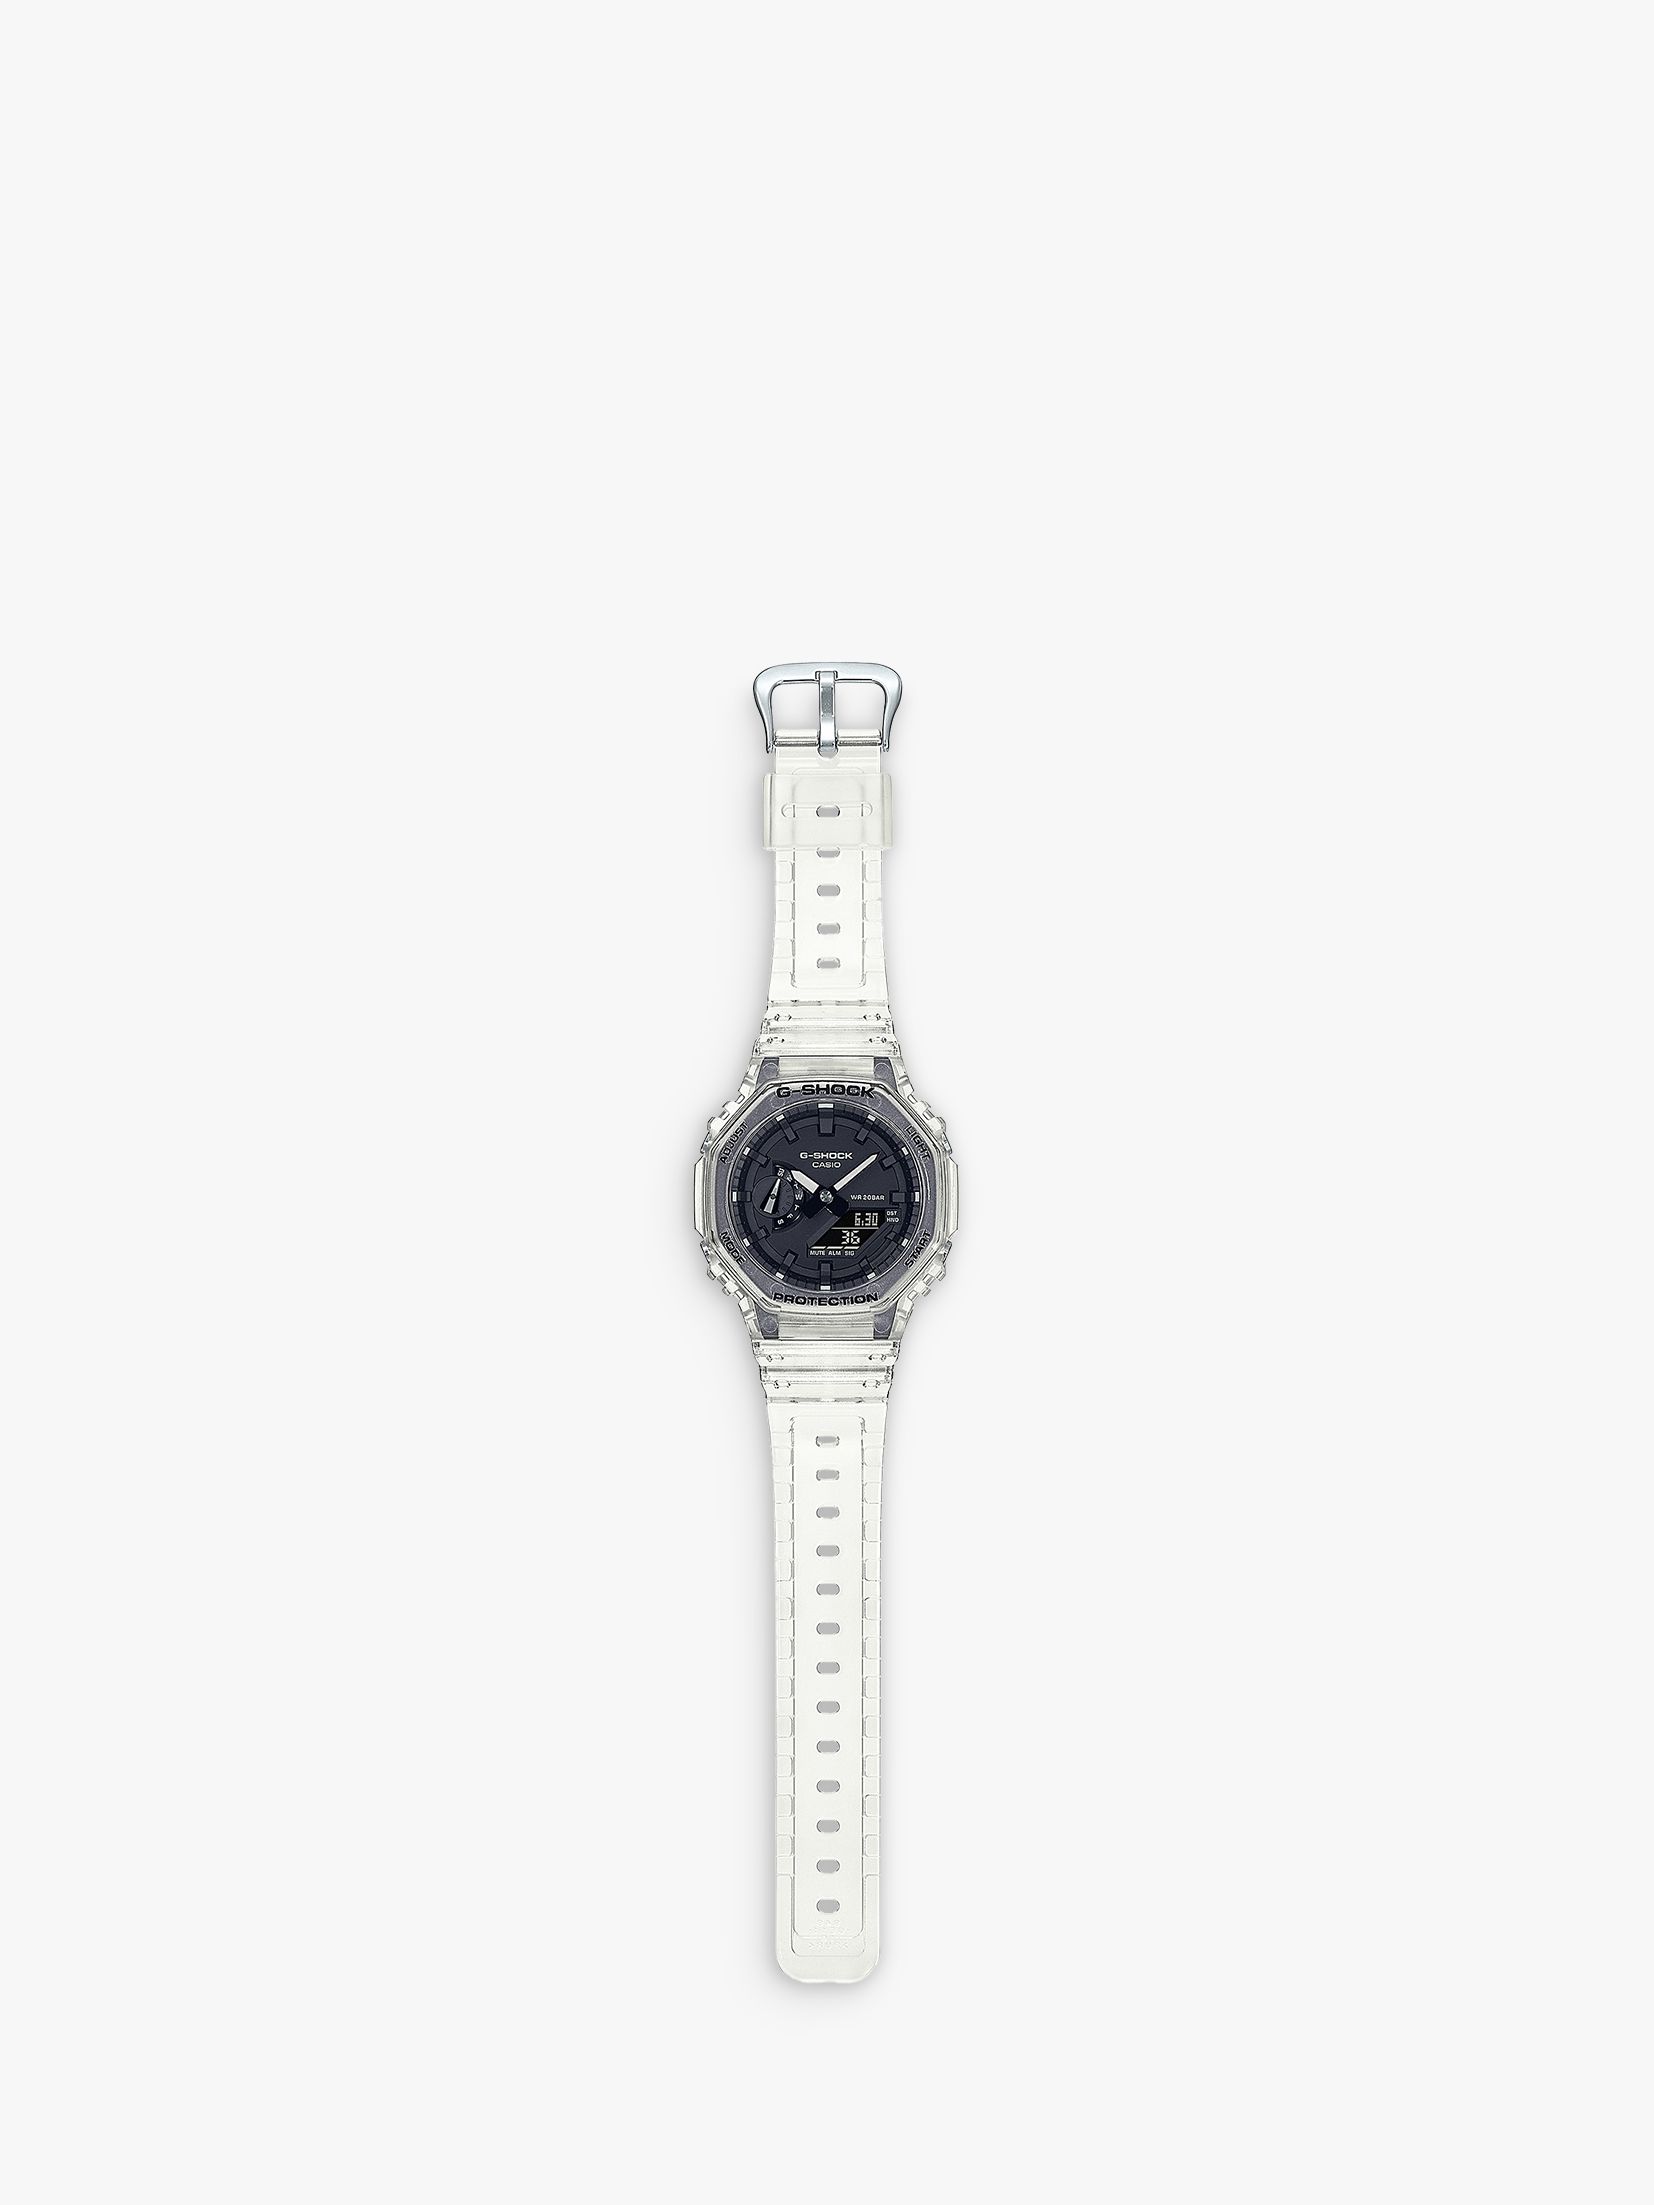 Casio GA-2100SKE-7AER Men's G-Shock Resin Strap Watch, Clear/Black